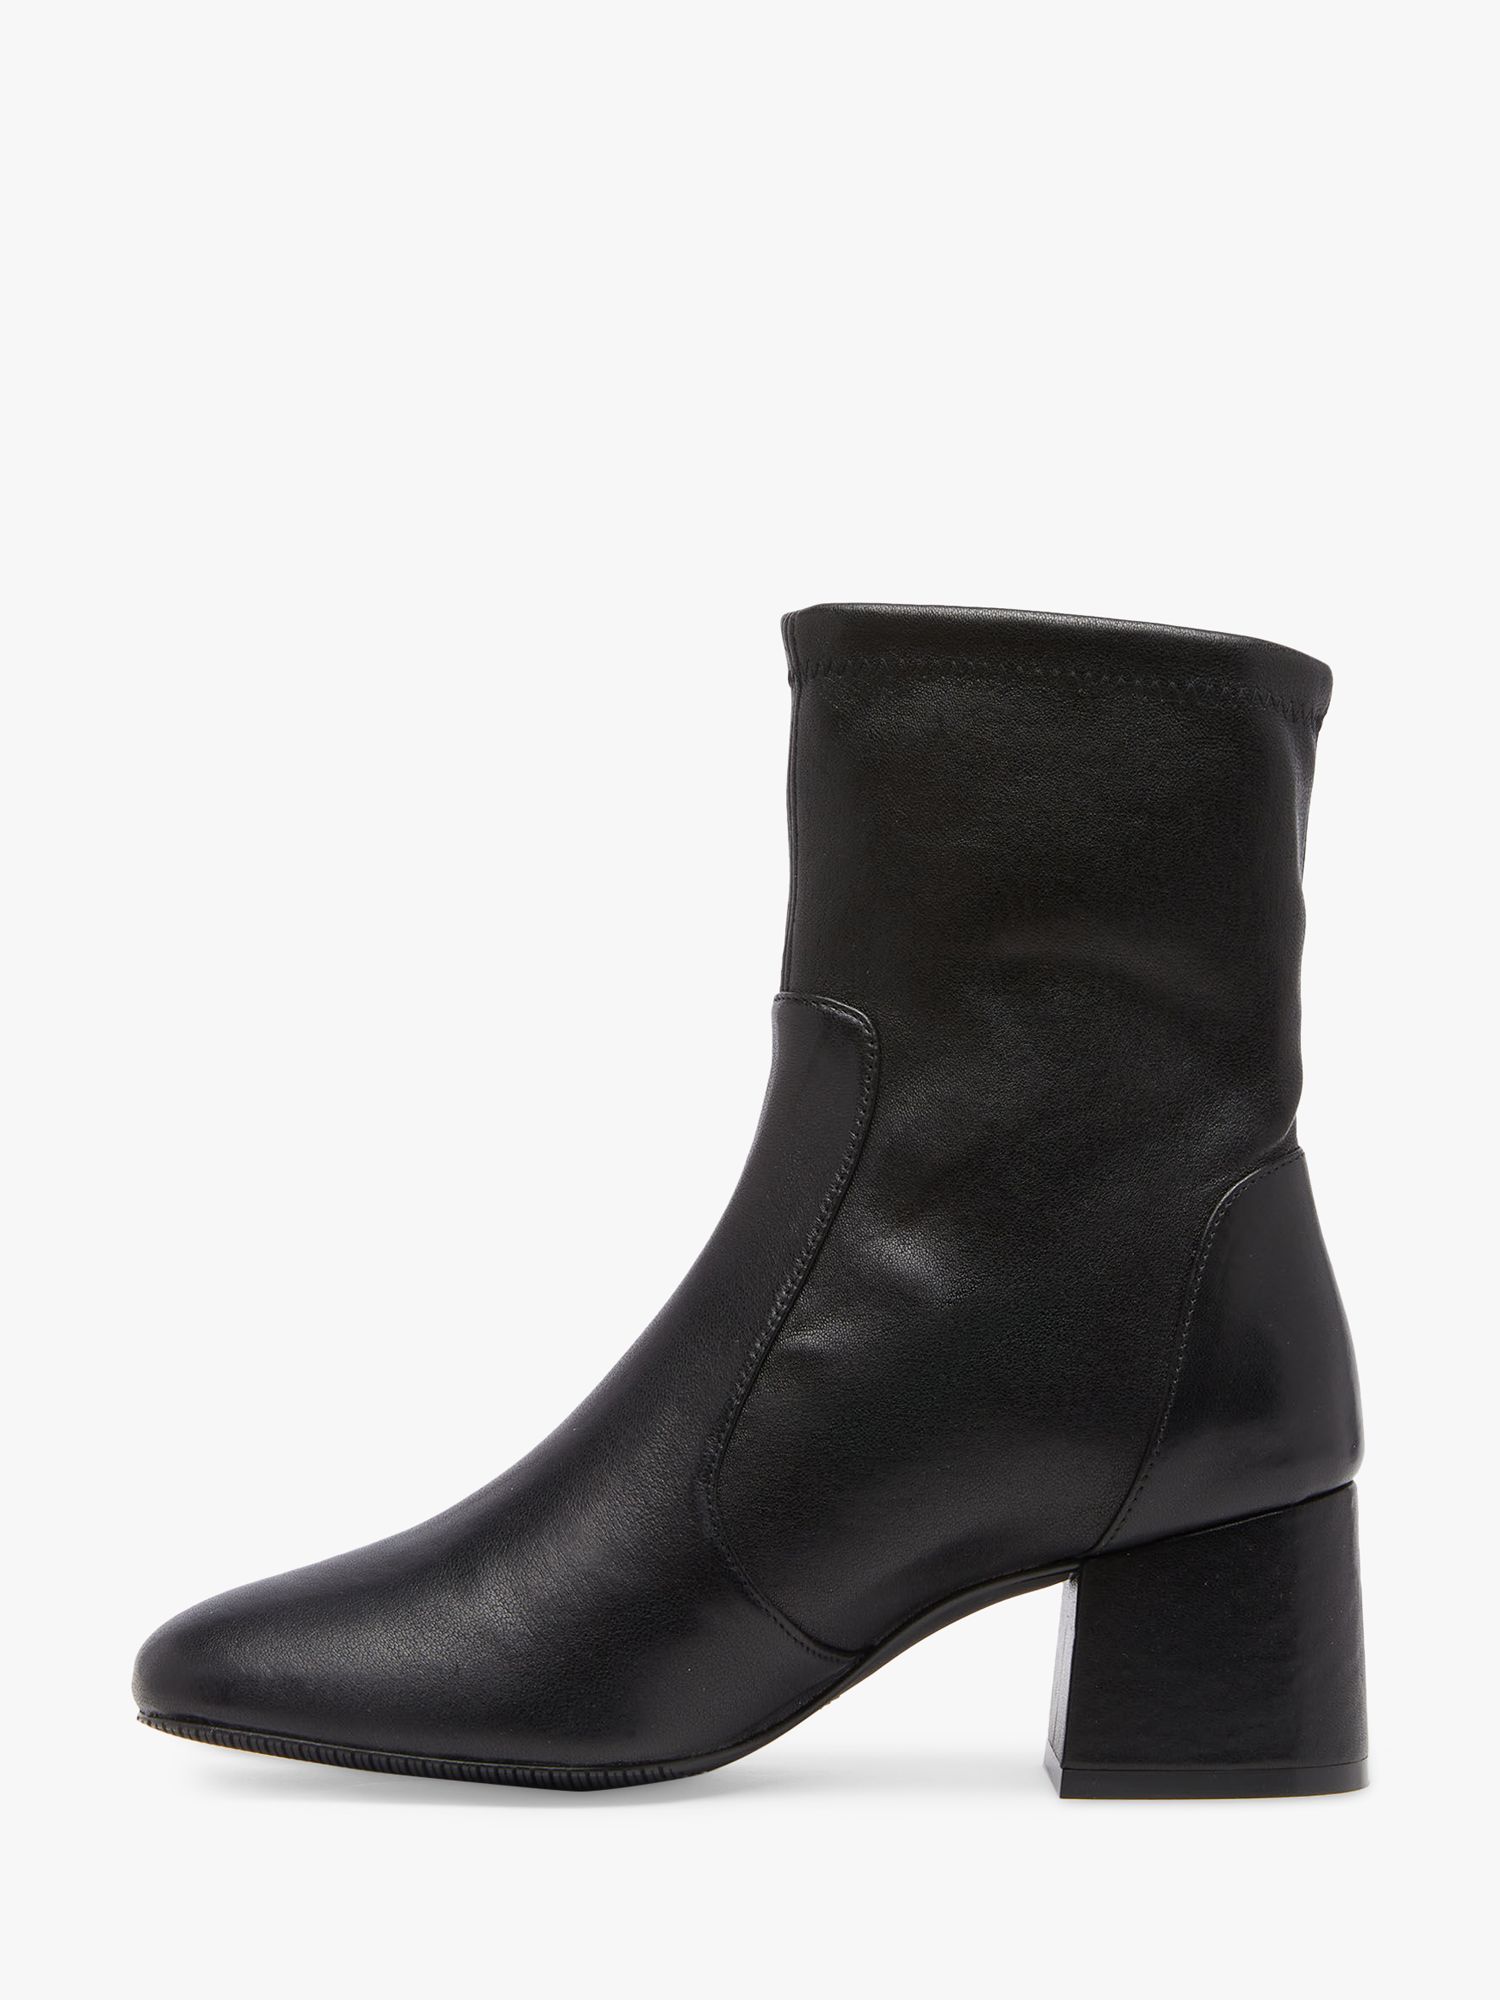 Stuart Weitzman Sleek 60 Leather Sock Boots, Black, 4